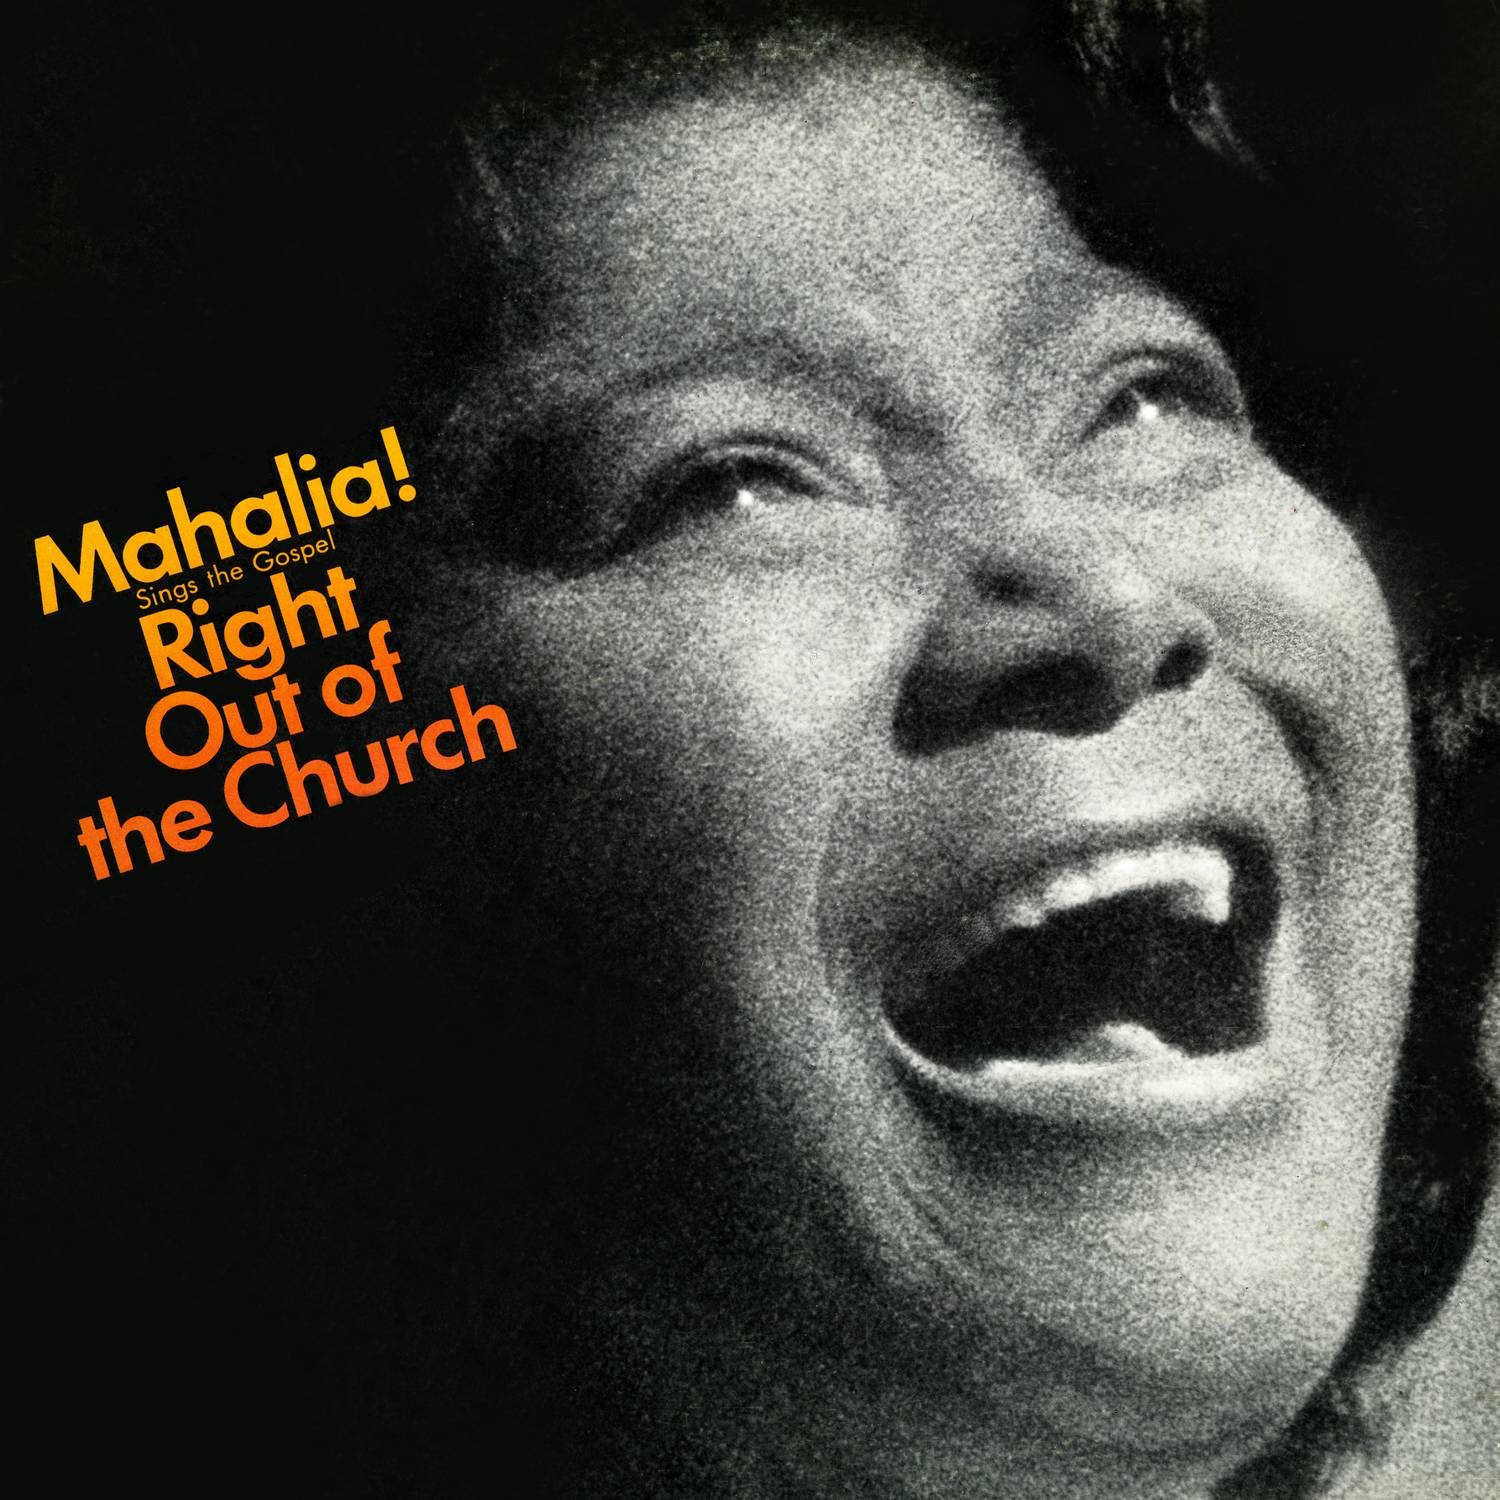 Mahalia Jackson – Mahalia Sings The Gospel Right Out Of The Church (1969/2015) [AcousticSounds FLAC 24bit/192kHz]